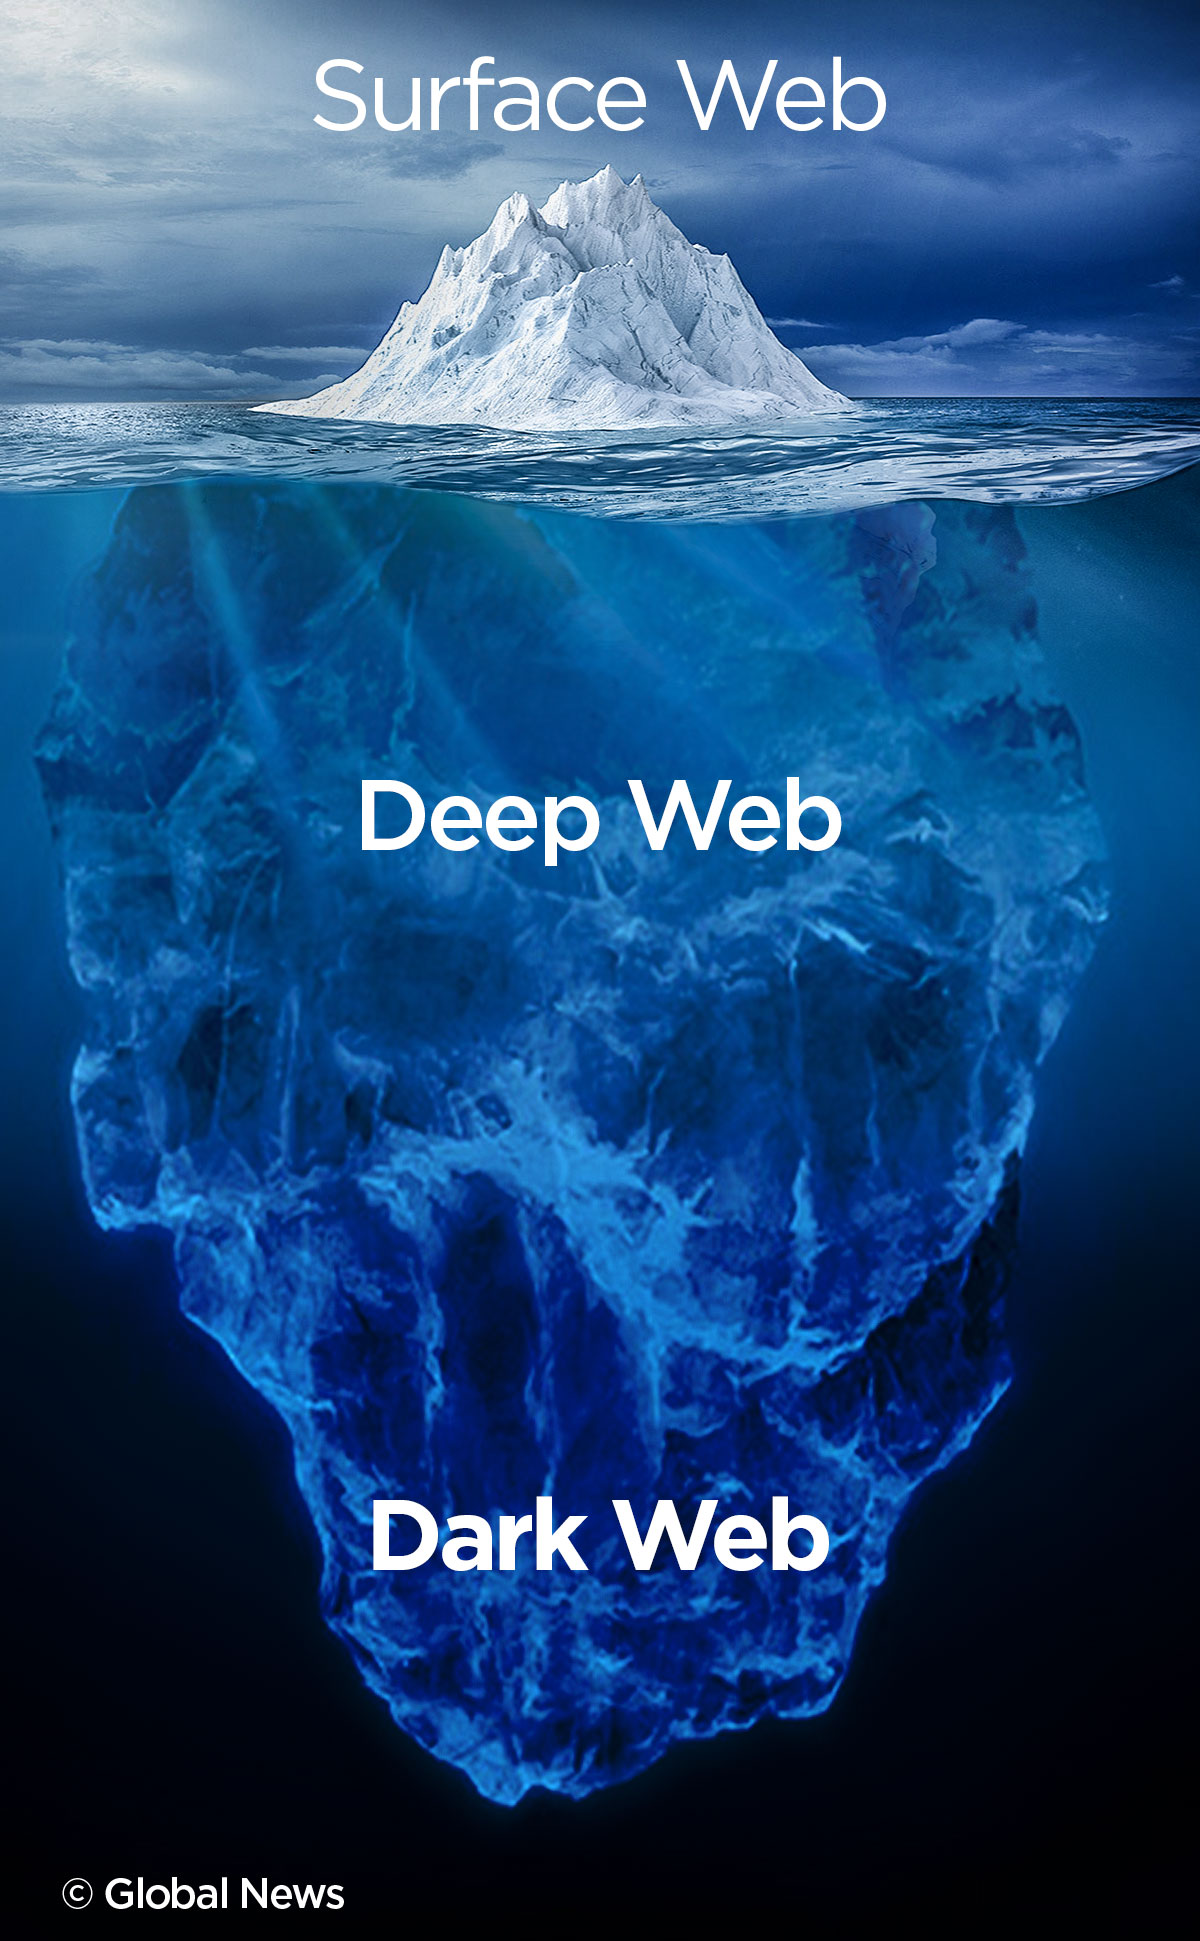 dark web iceberg analogy